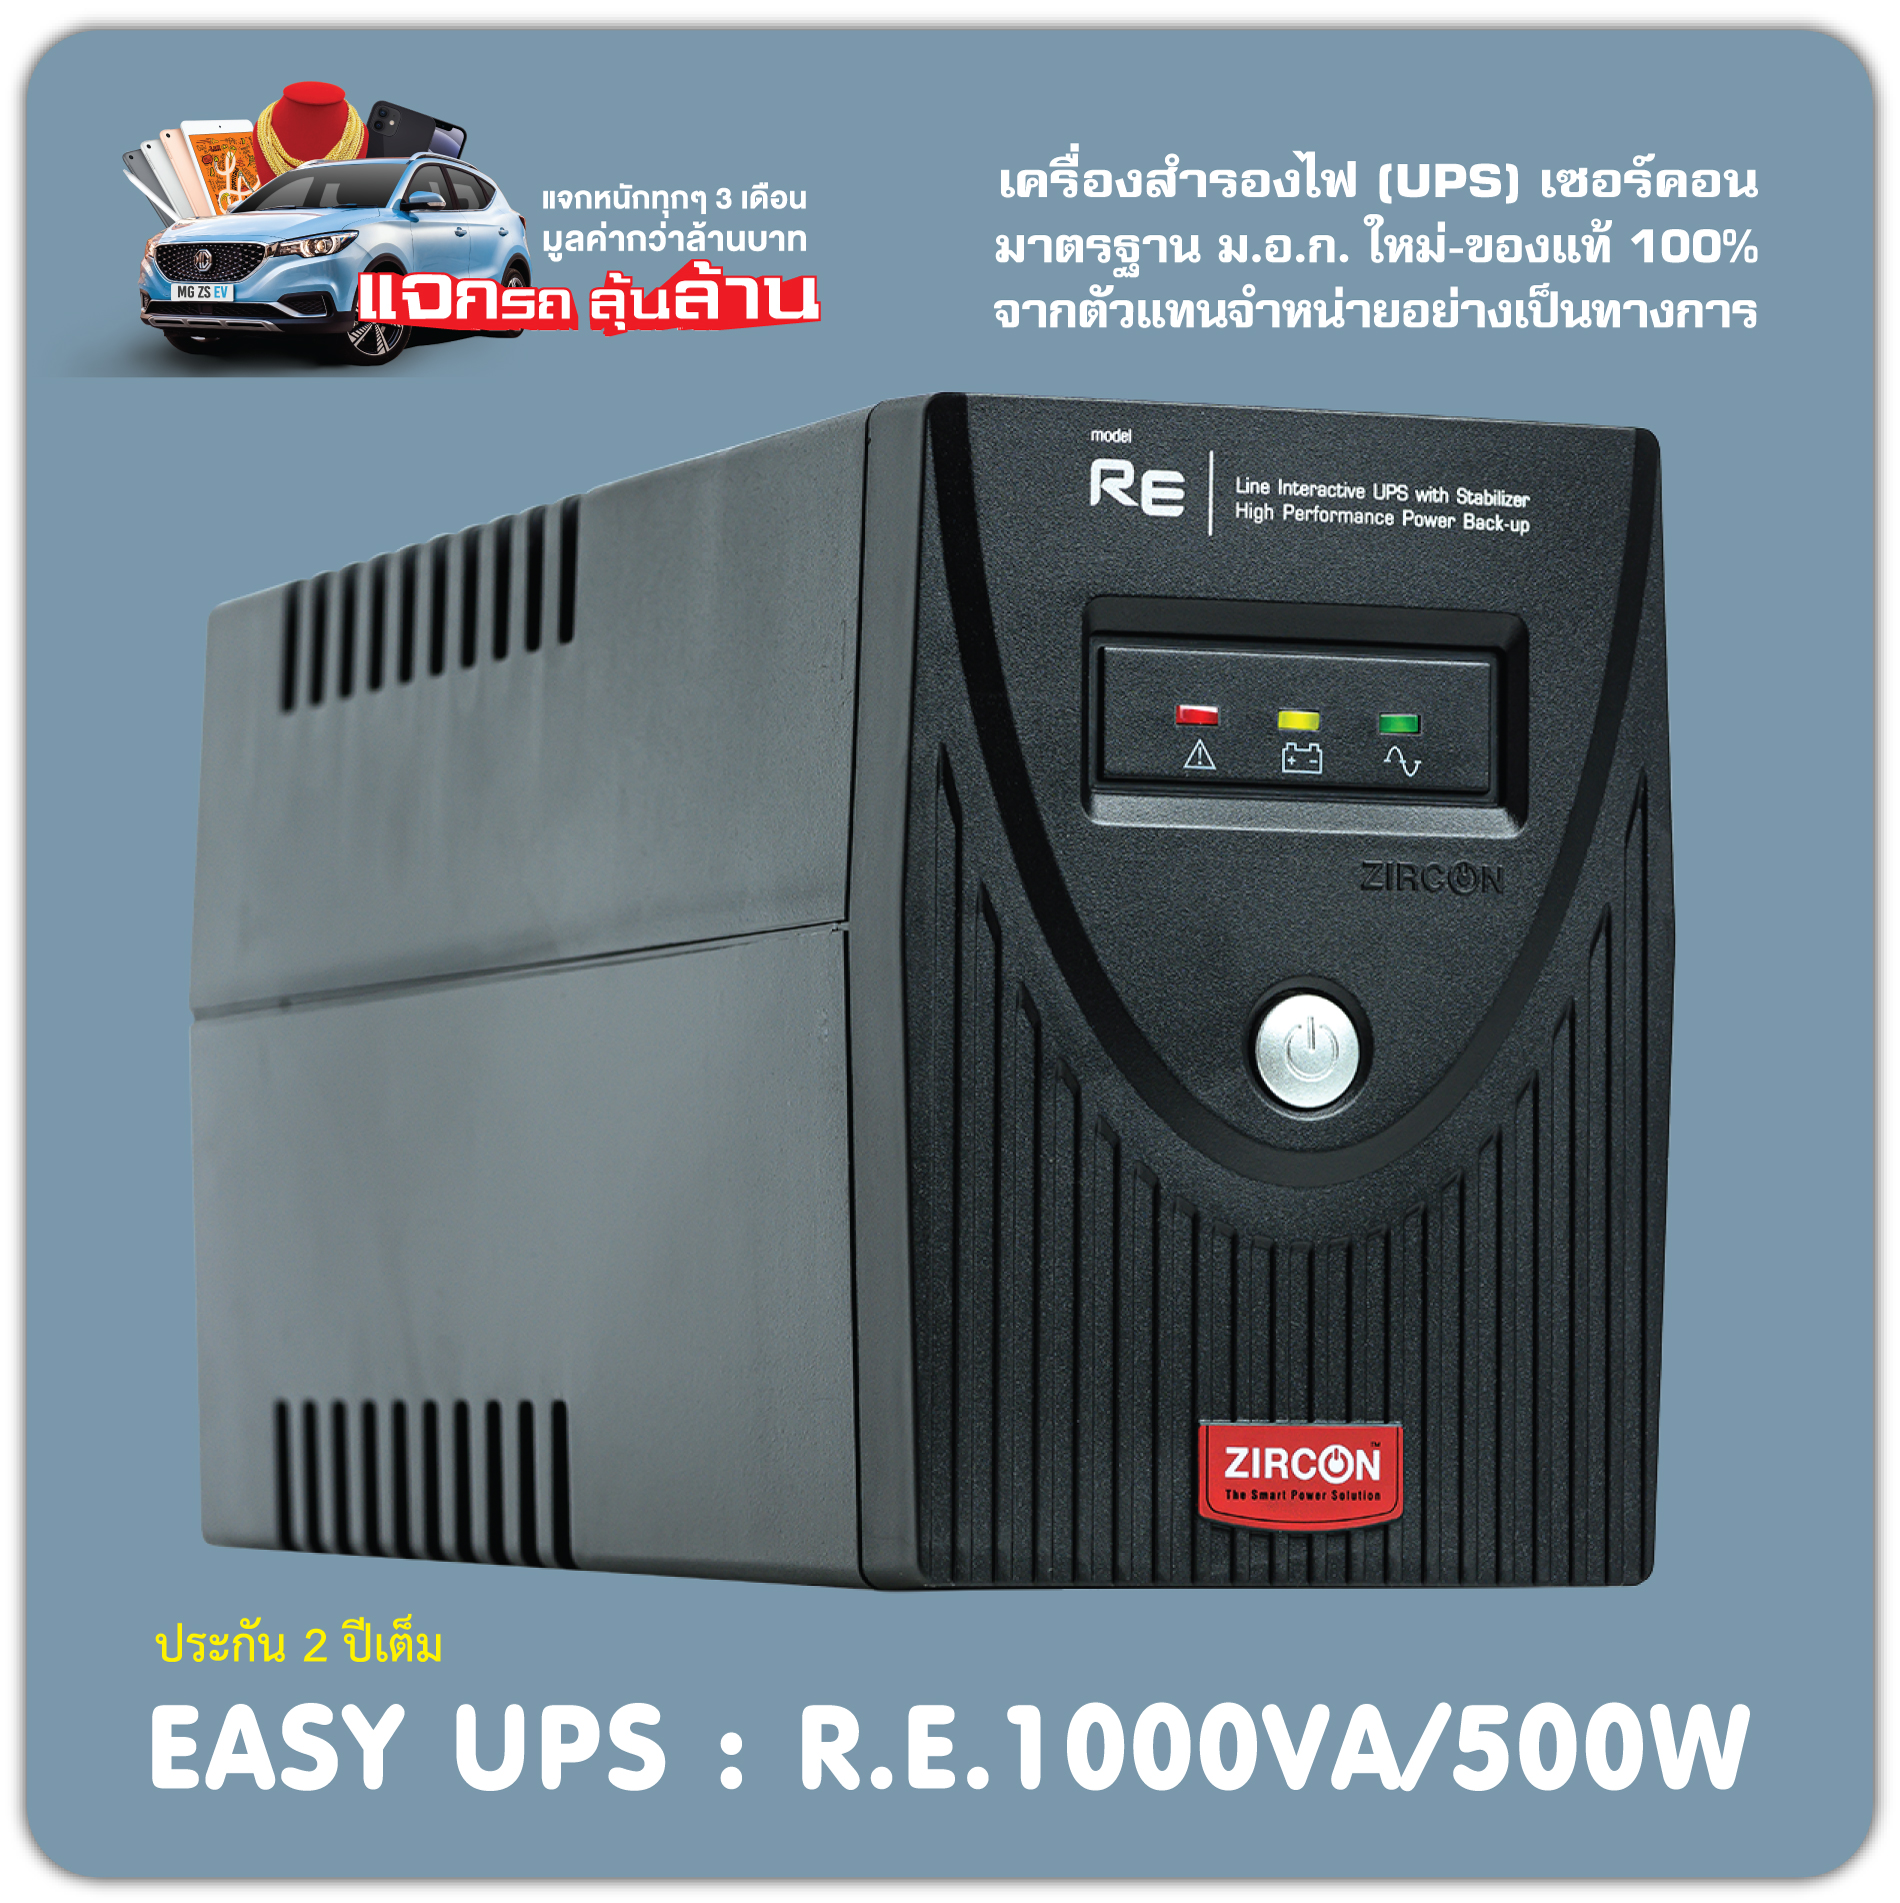 NEW-UPS : EASY UPS R.E.1000VA/500W ZIRCON [รับฟรีโค๊ดส่วนลดอีก100บาท] มือหนึ่ง ราคาประหยัด ใช้งานง่าย สำหรับคอมออฟฟิศทั่วไป ประกัน 2ปี